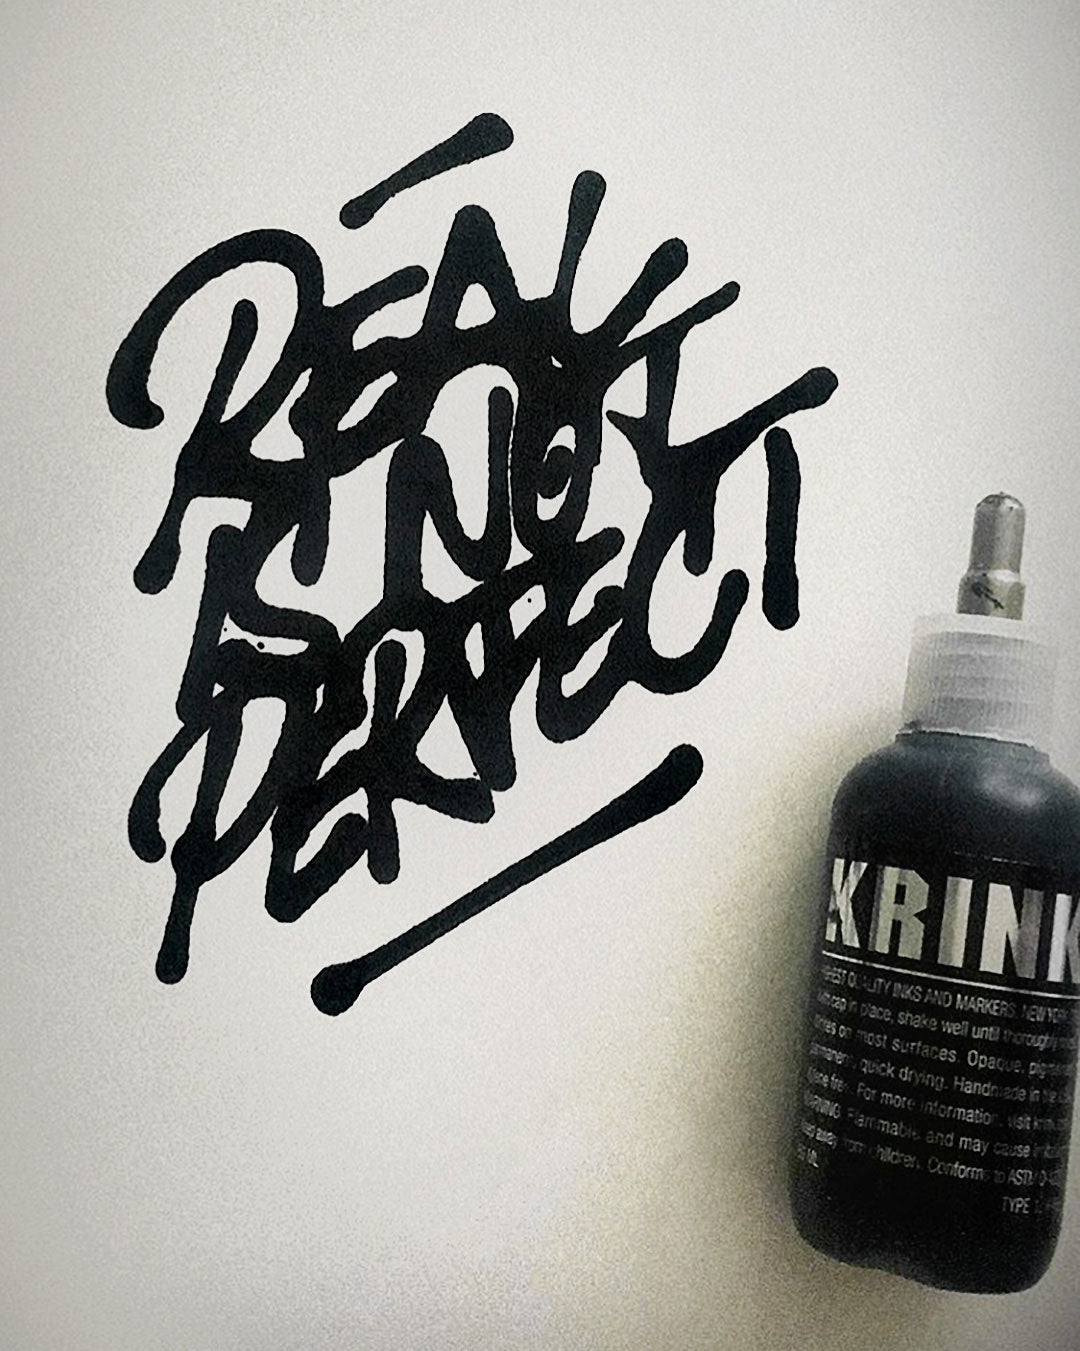 Stephane Lopes uses Krink K-66 Steel-Tip Paint Marker